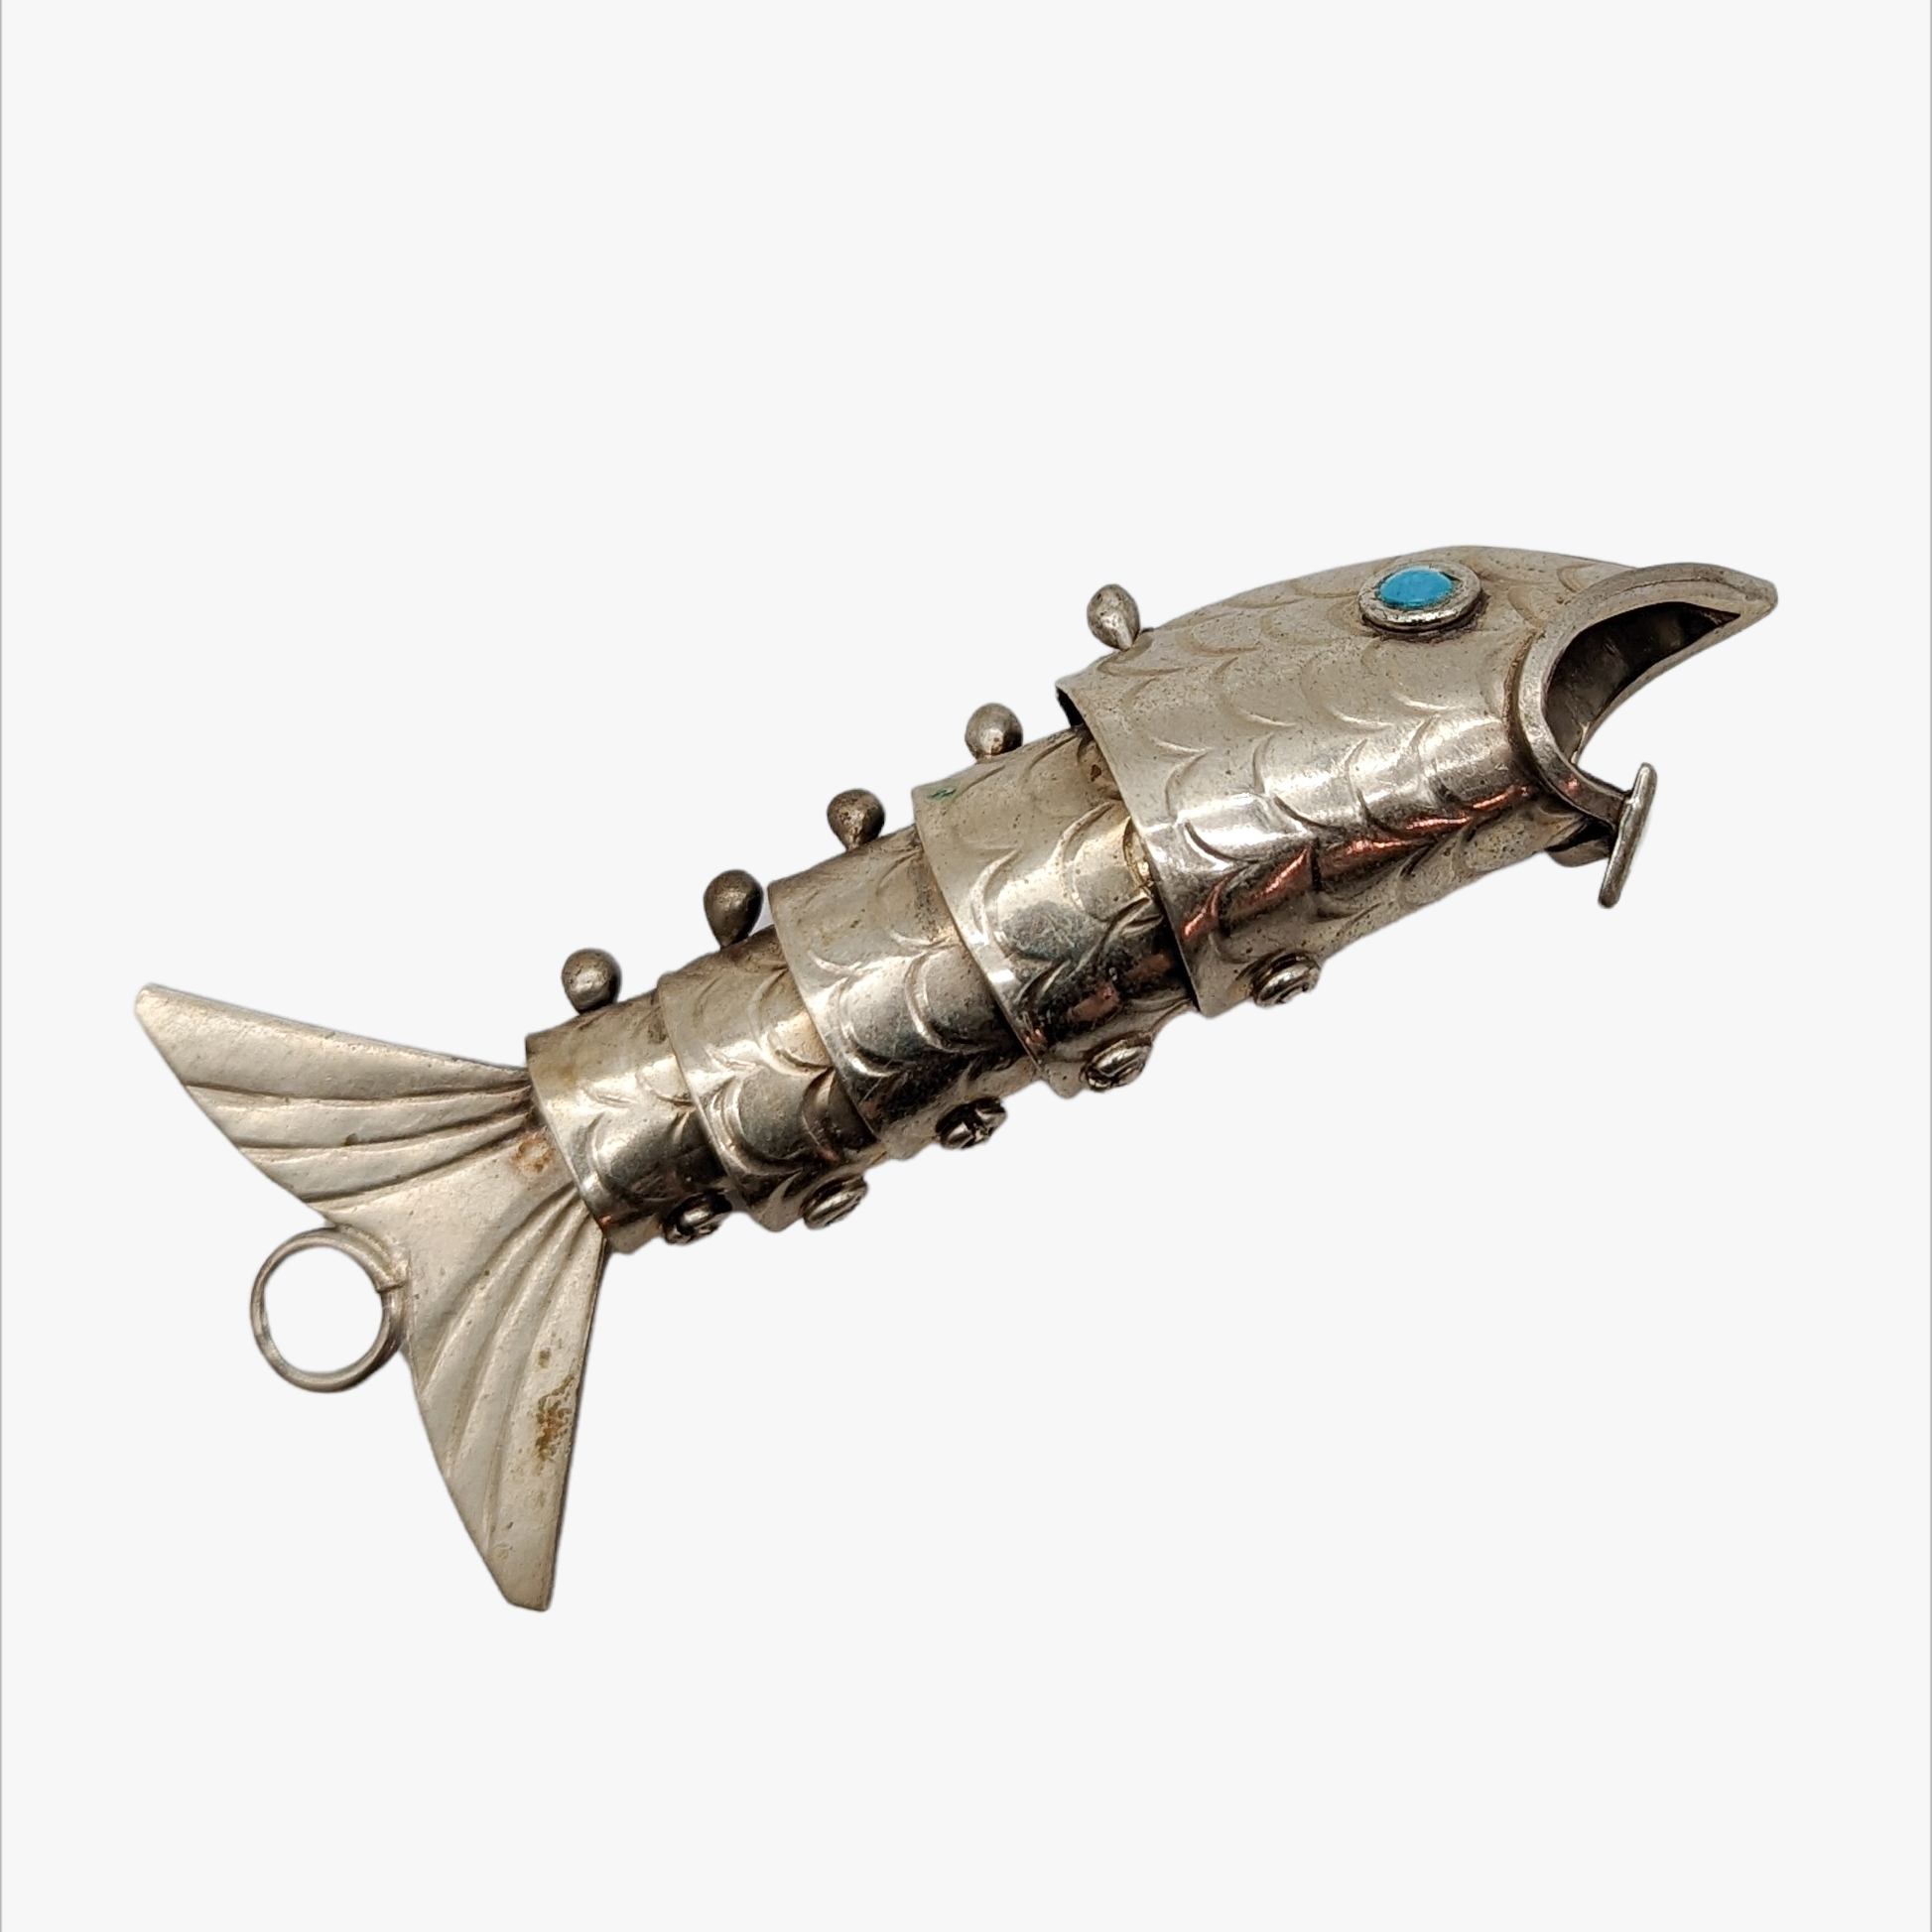 Vintage Jointed Nickel Silver Fish Pendant Bottle Opener